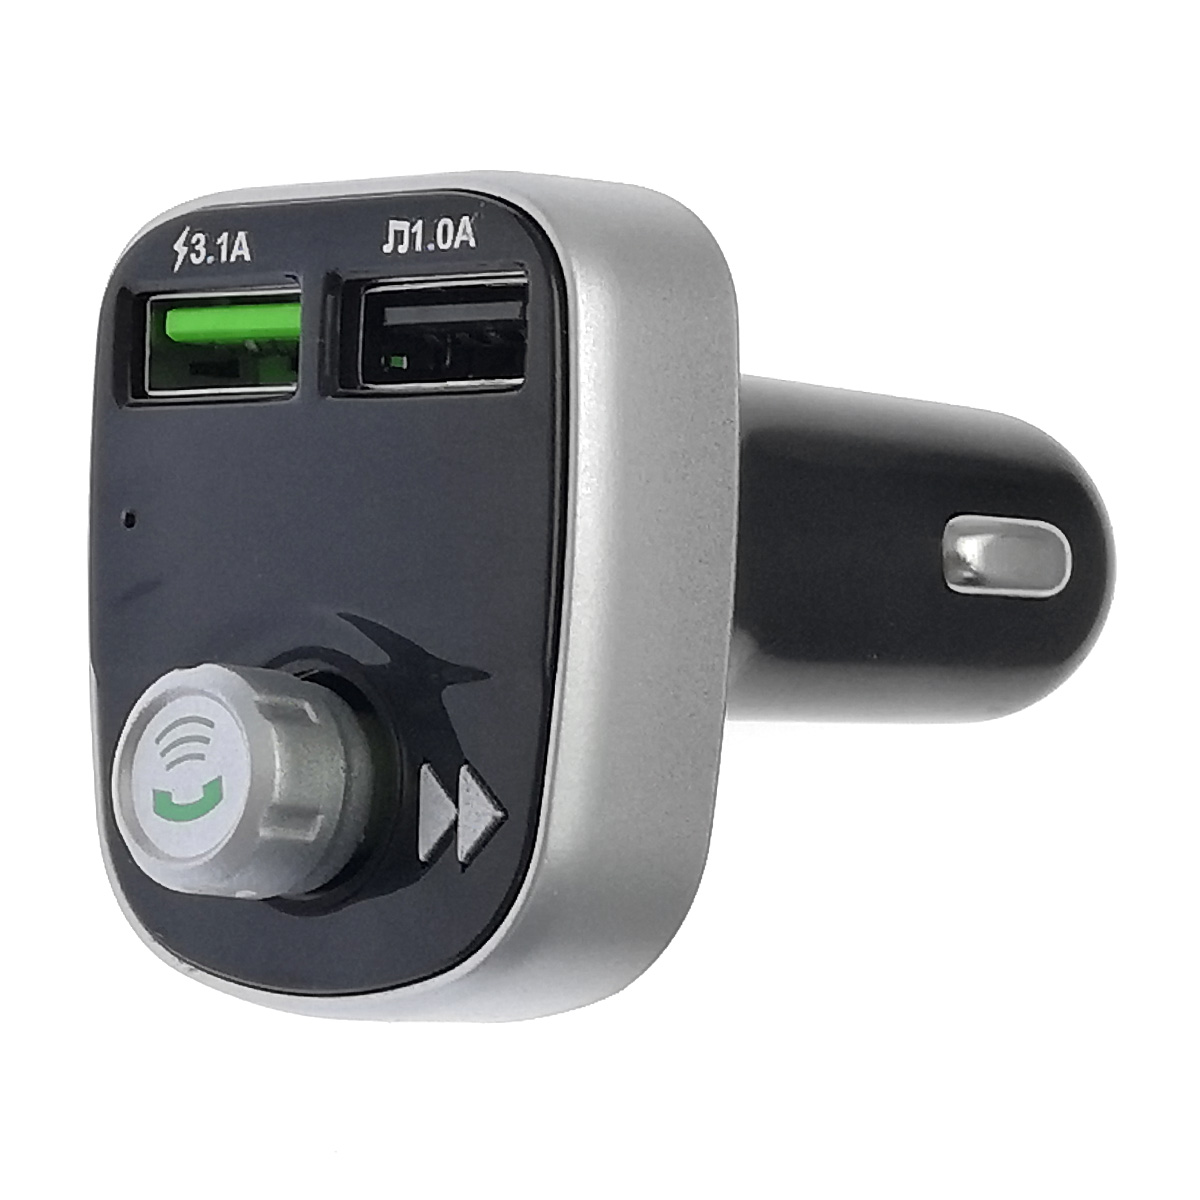 FM-модулятор X29, 2 USB, MP3, 3.1A, Bluetooth 3.0, цвет черный